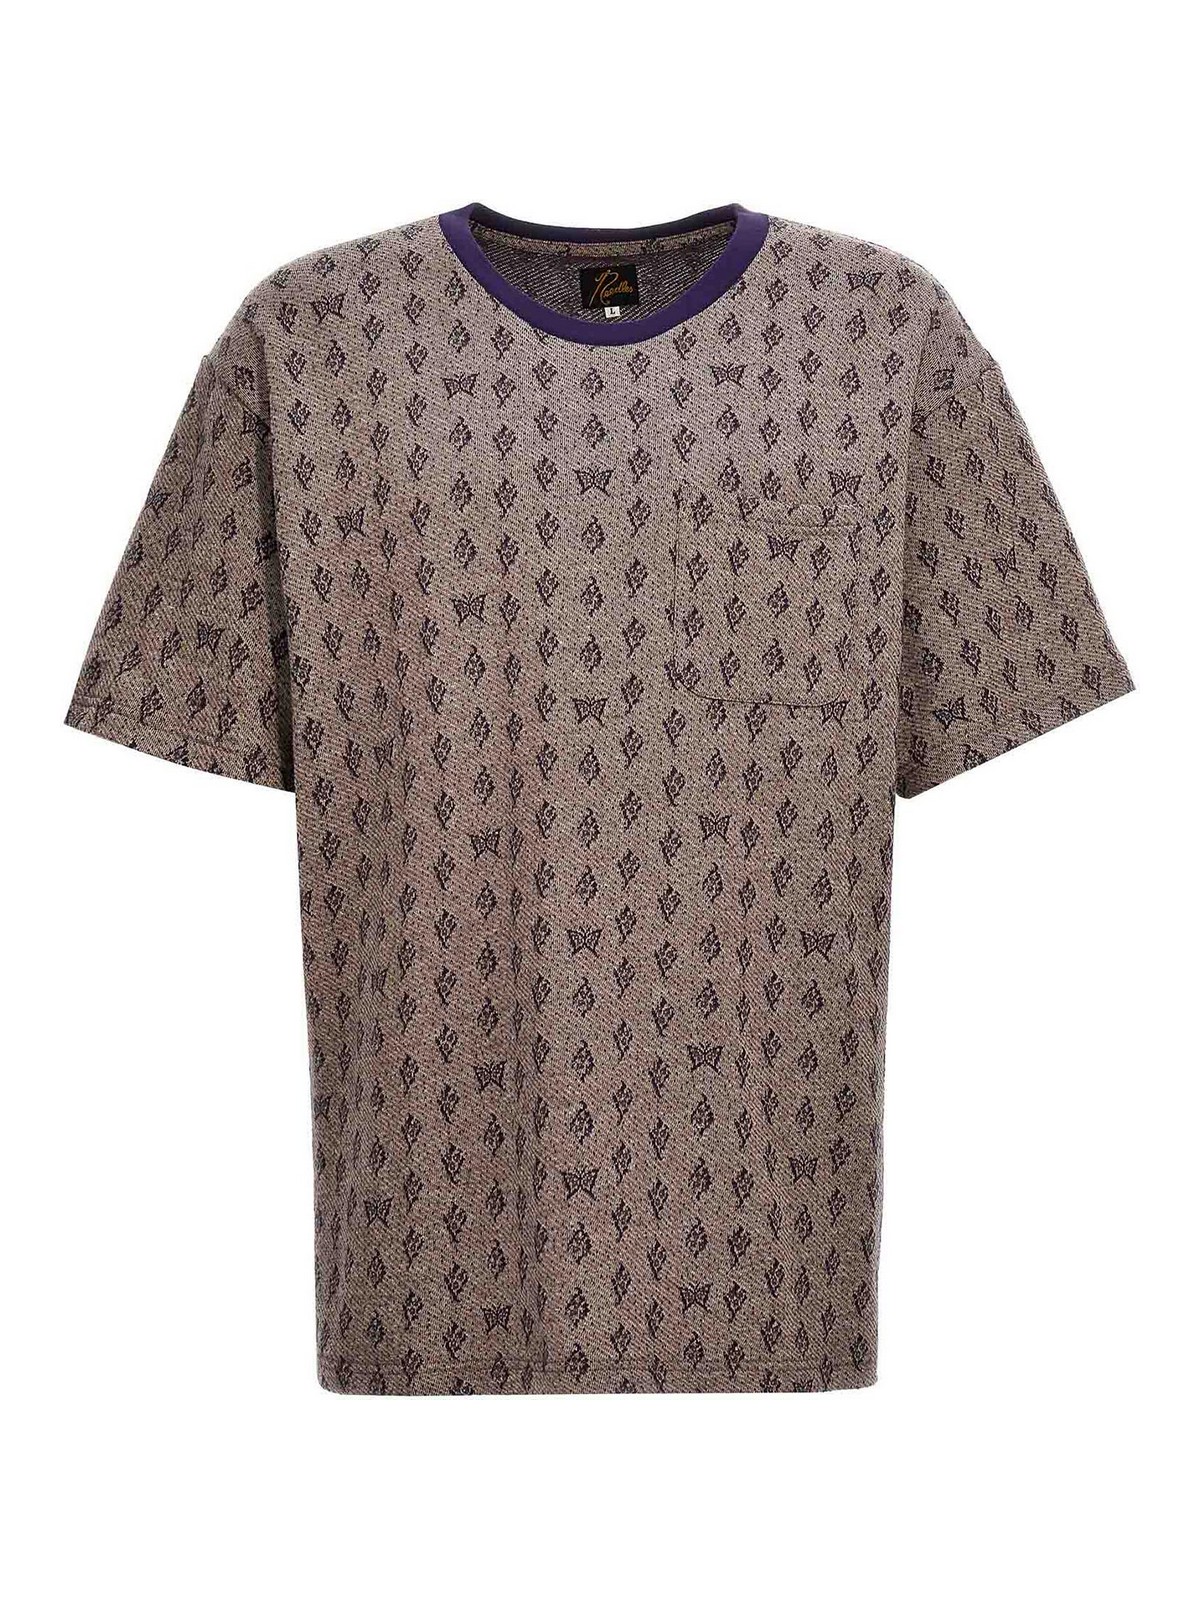 Needles Jacquard Patterned T-shirt In Purple